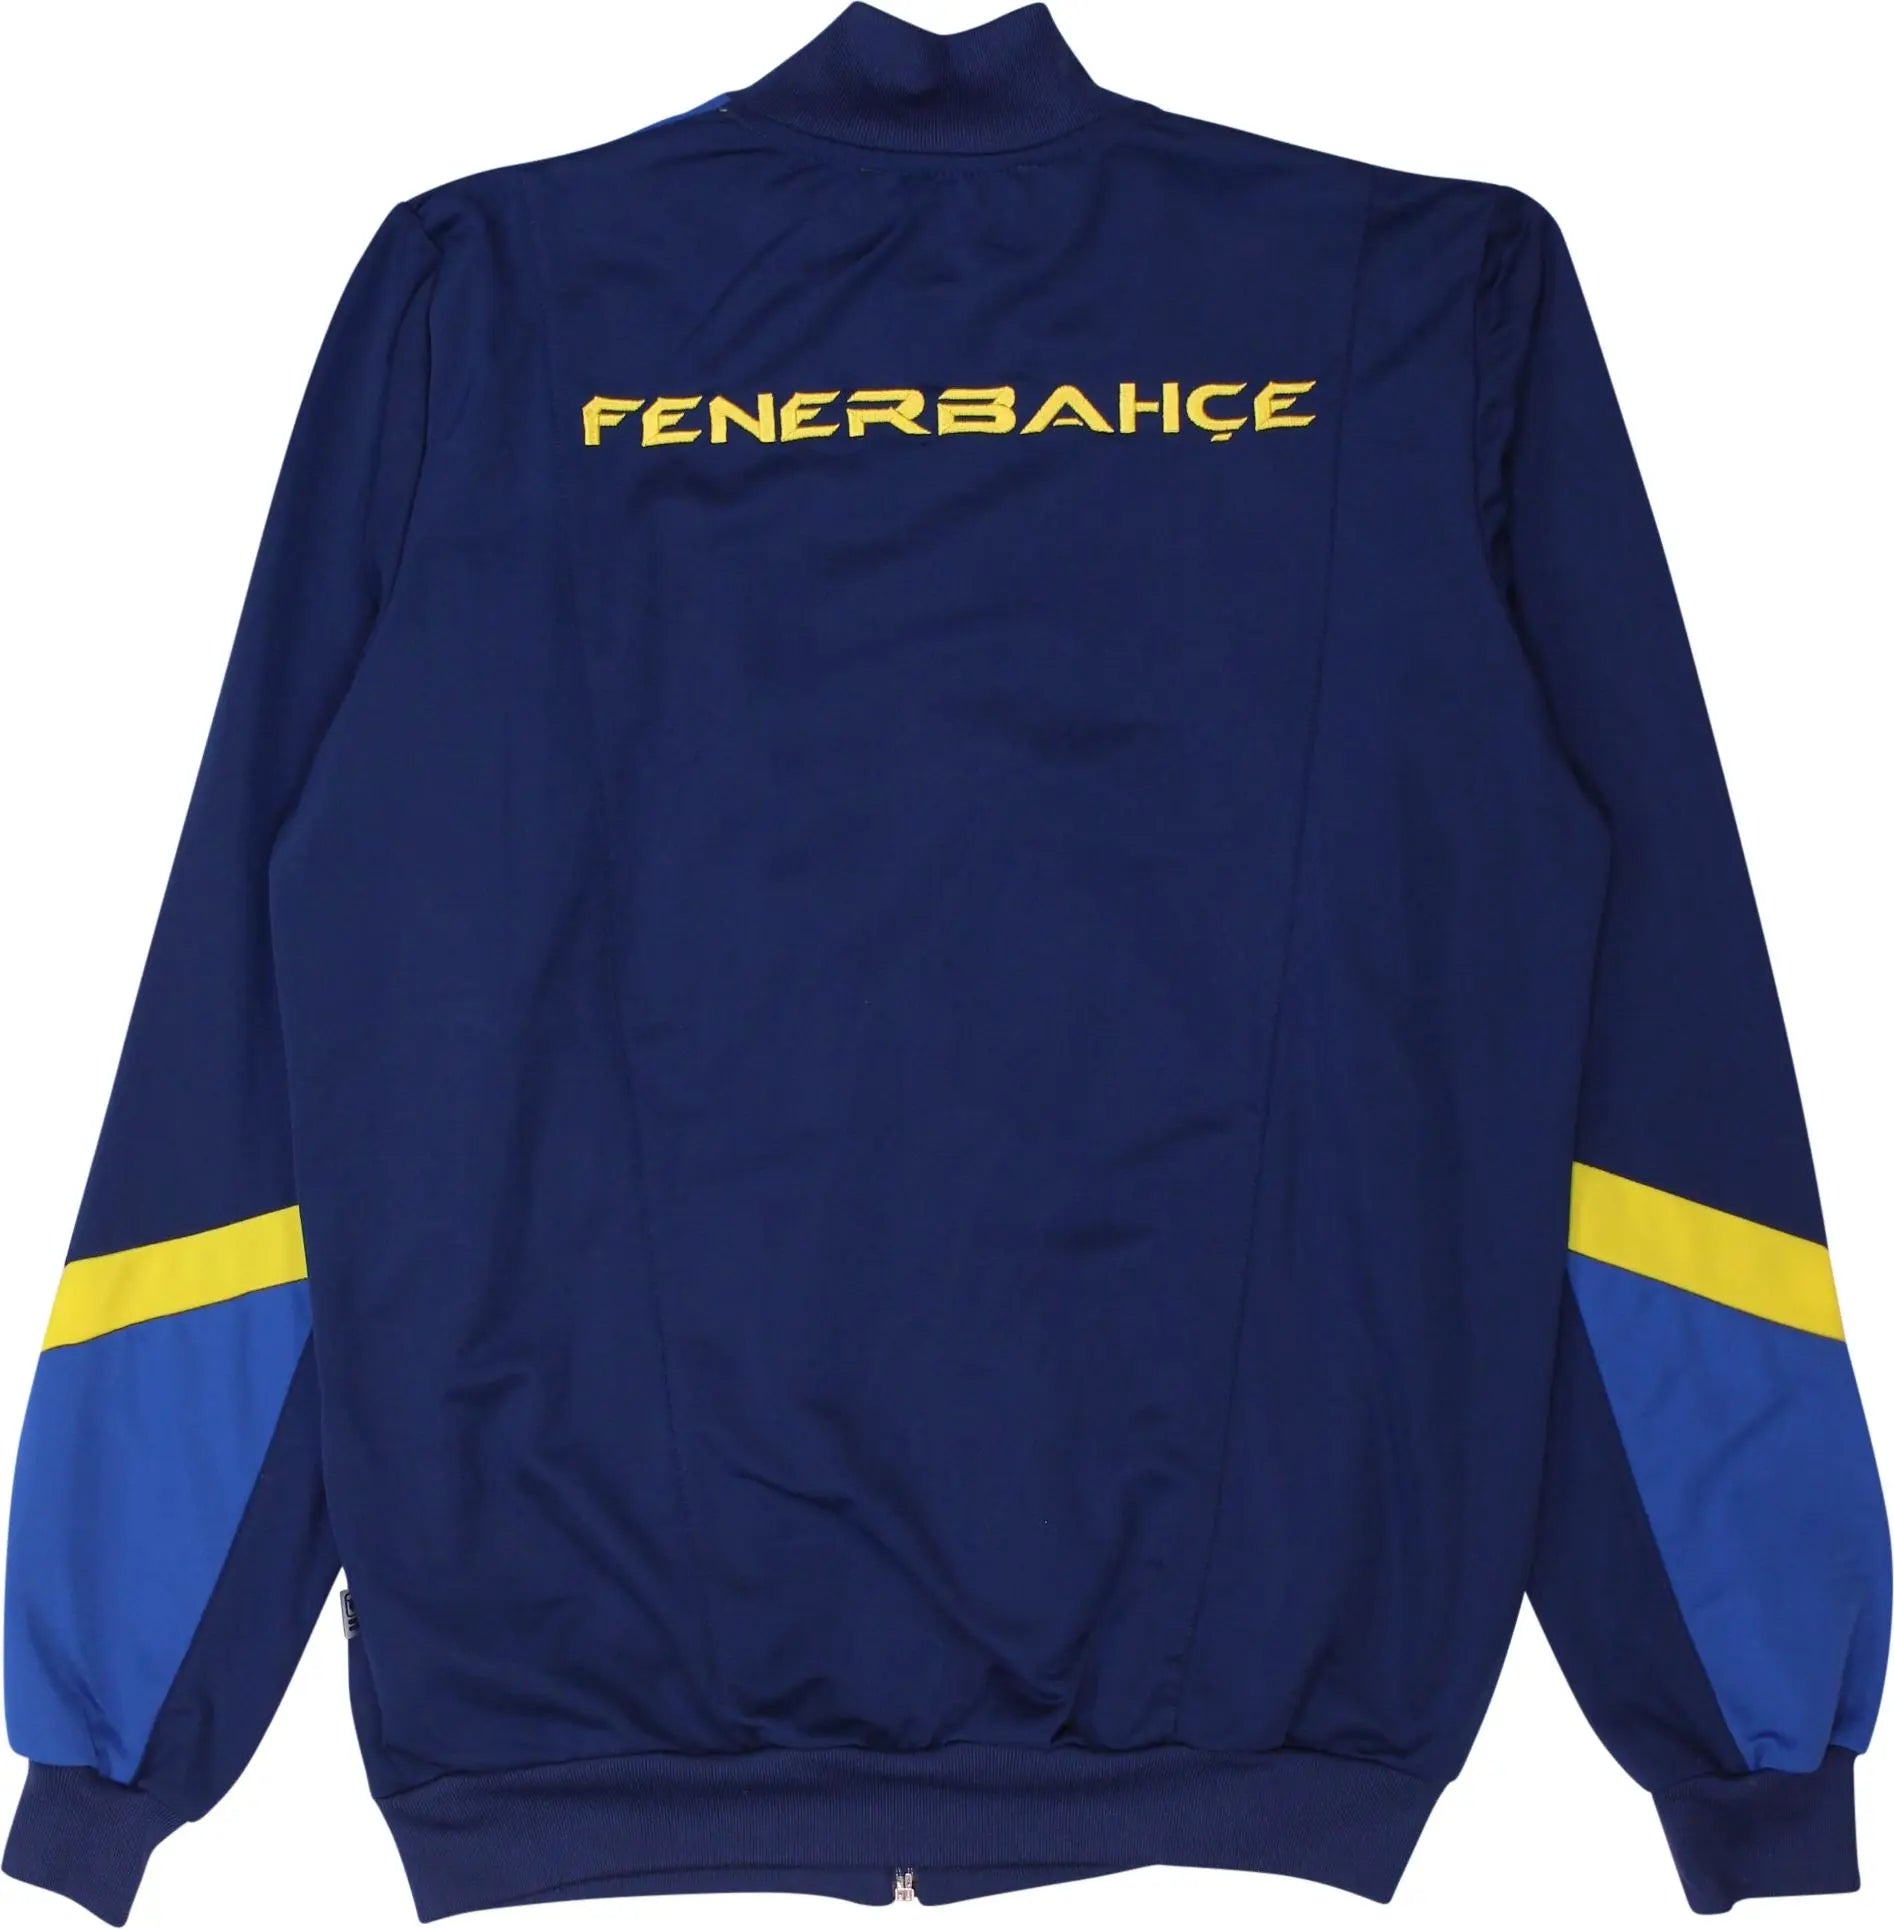 Fenerium - Vintage Track Jacket by Fenerium- ThriftTale.com - Vintage and second handclothing